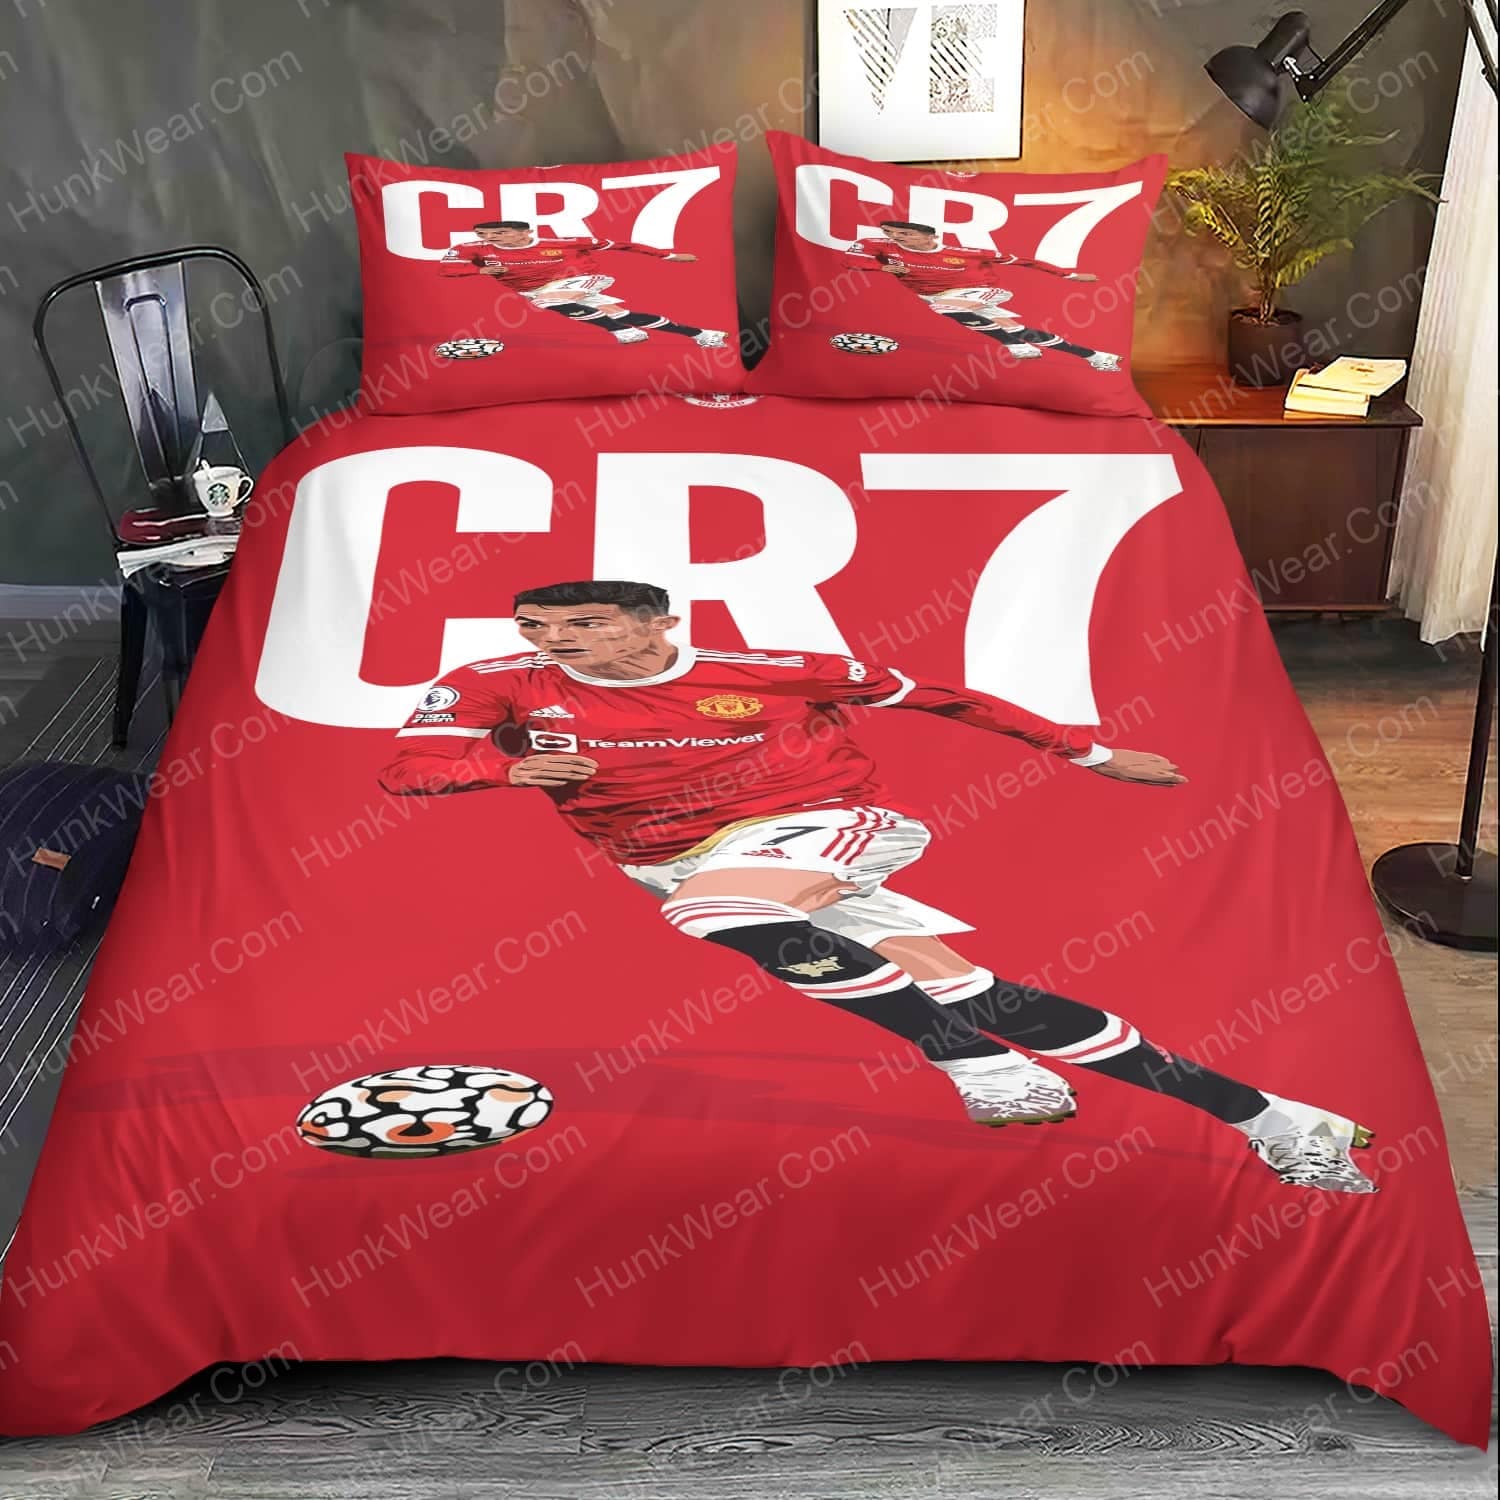 Cristiano Ronaldo Manchester United Bed Set Bedding Set HunkWear.Com